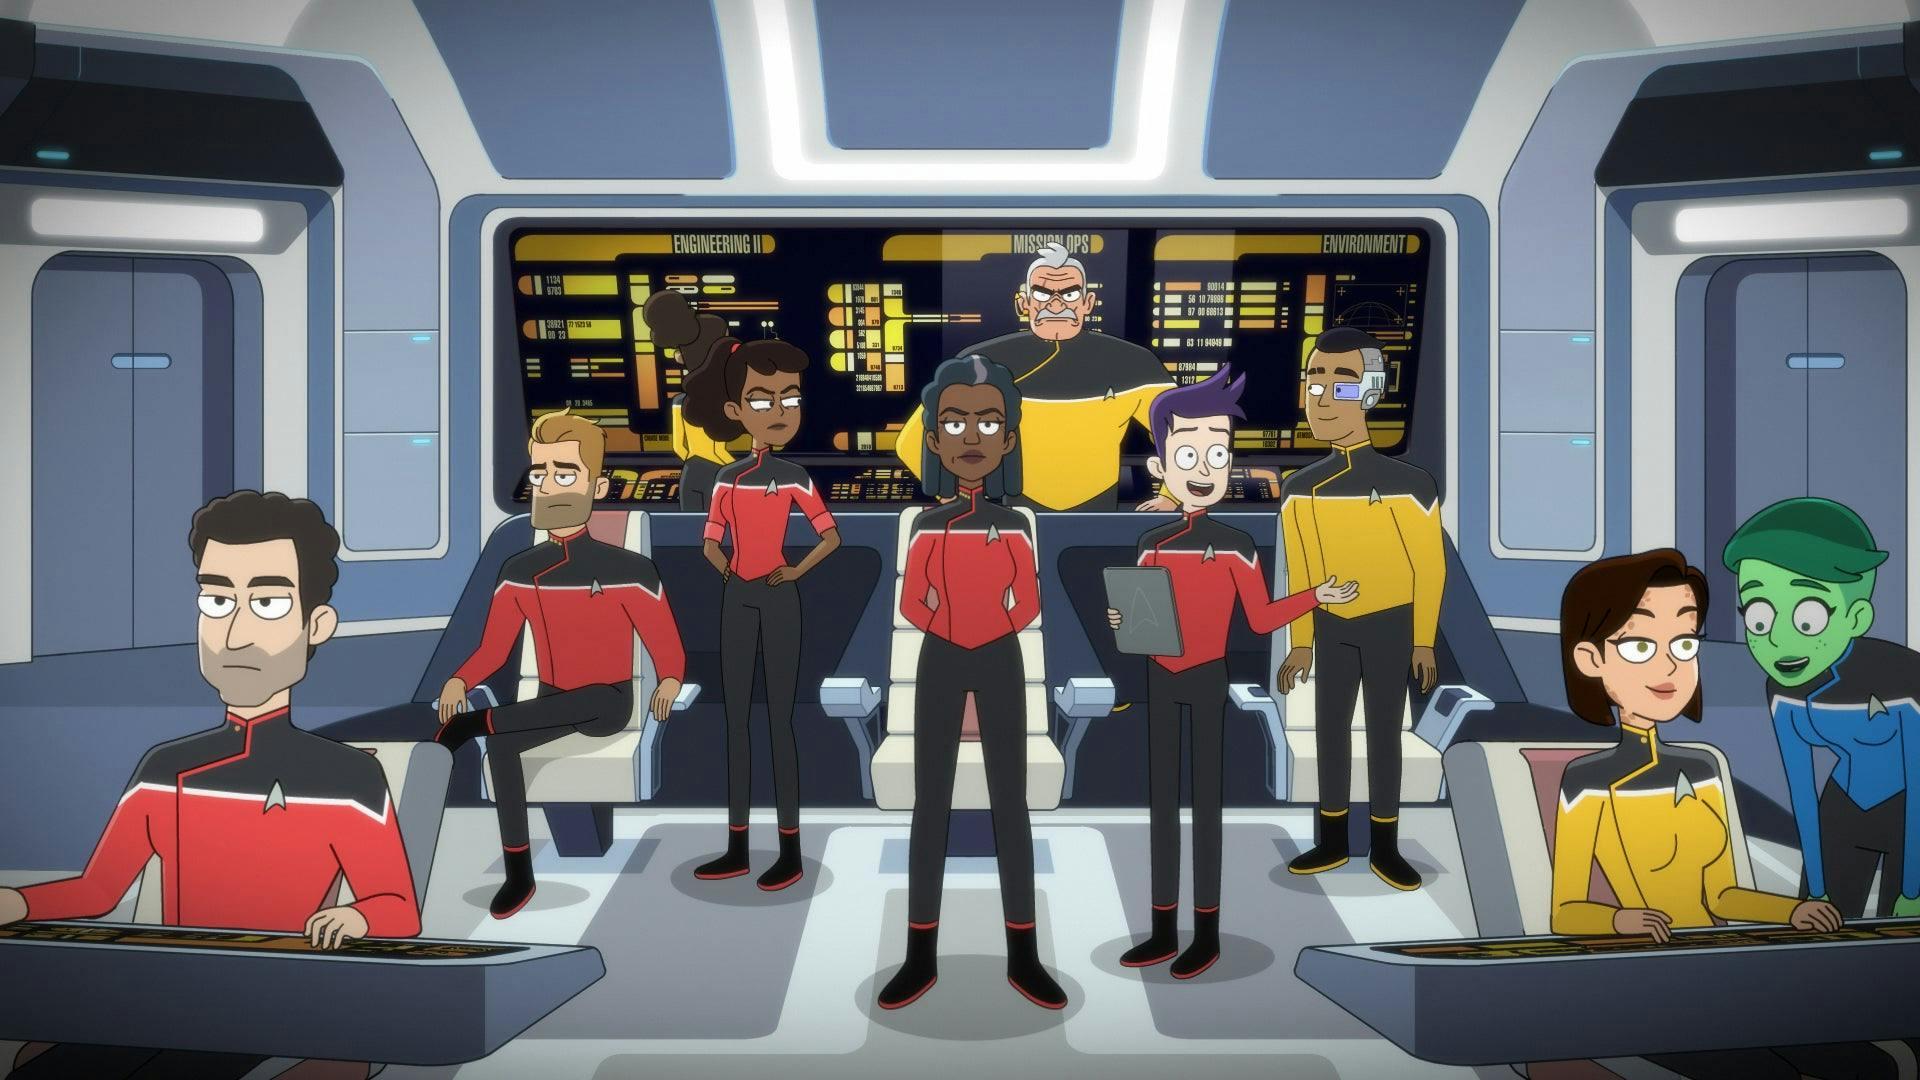 Star Trek: Lower Decks - "Crisis Point"